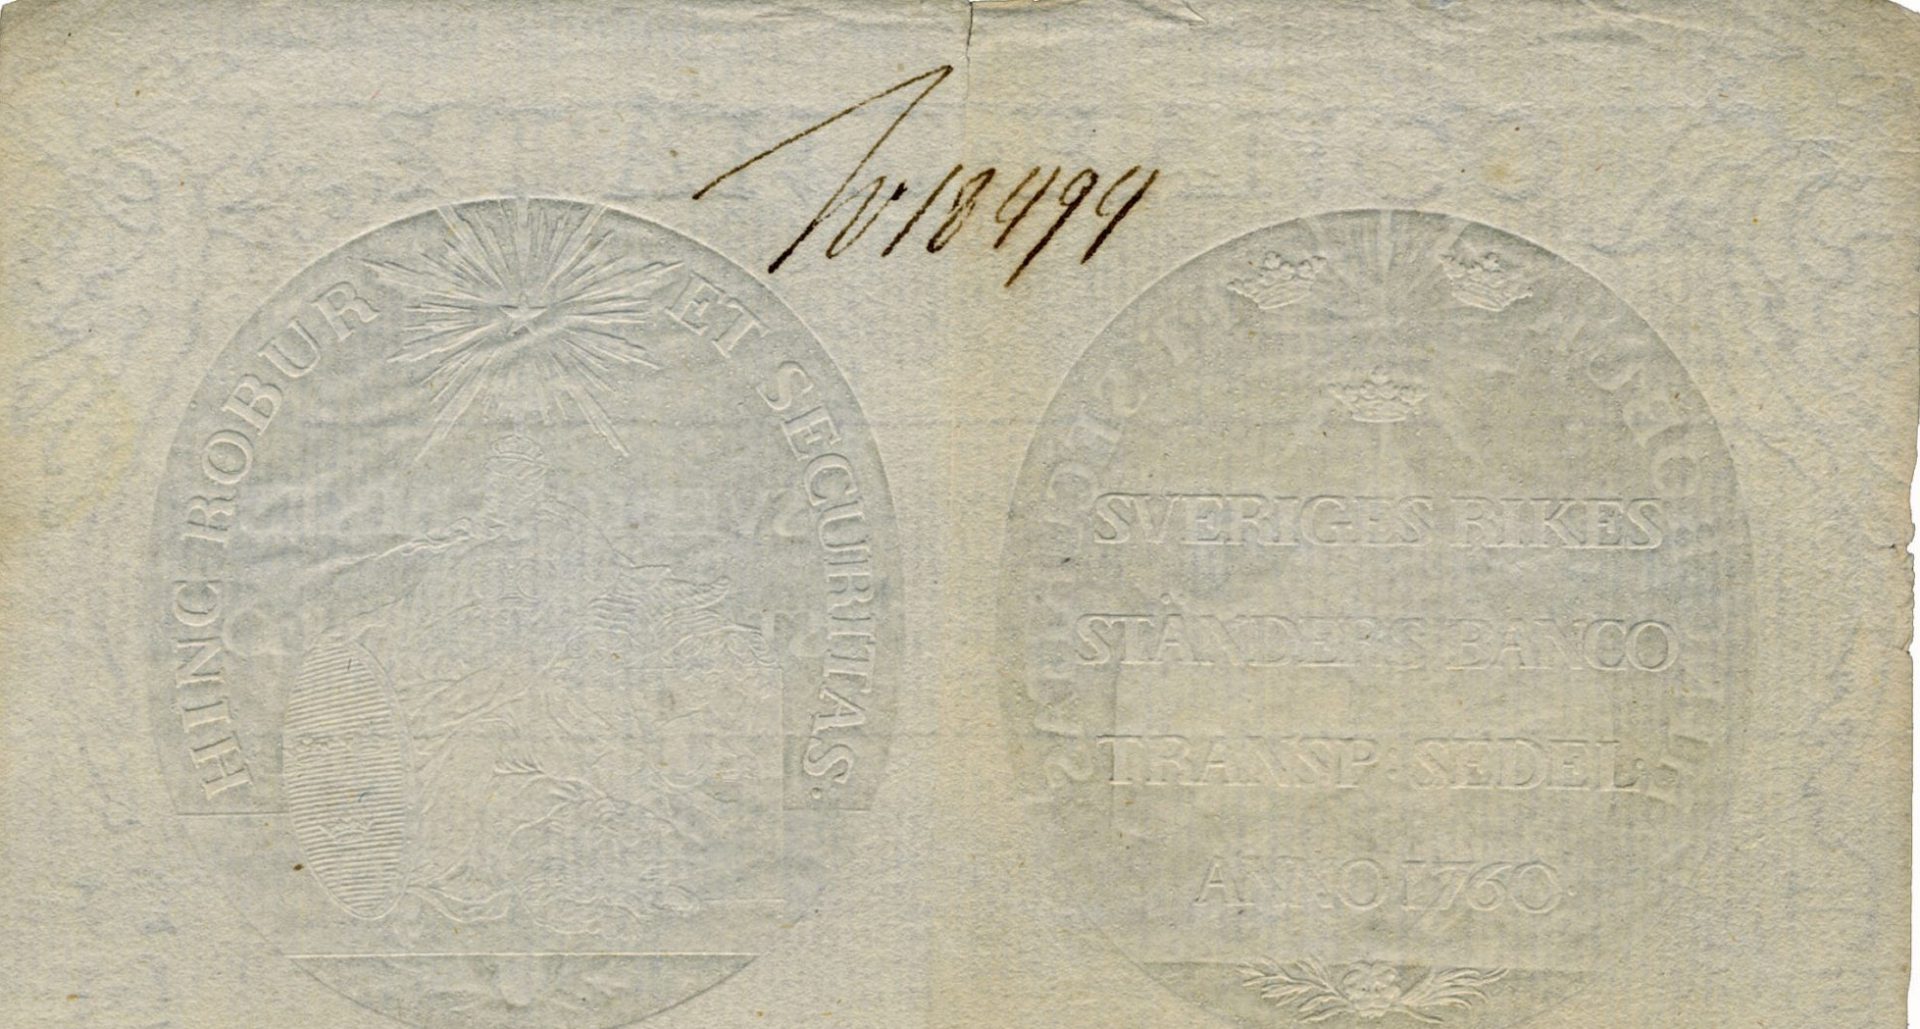 En sedel med texten "Sveriges rikes ständers Banco Transp sedel Anno 1760.